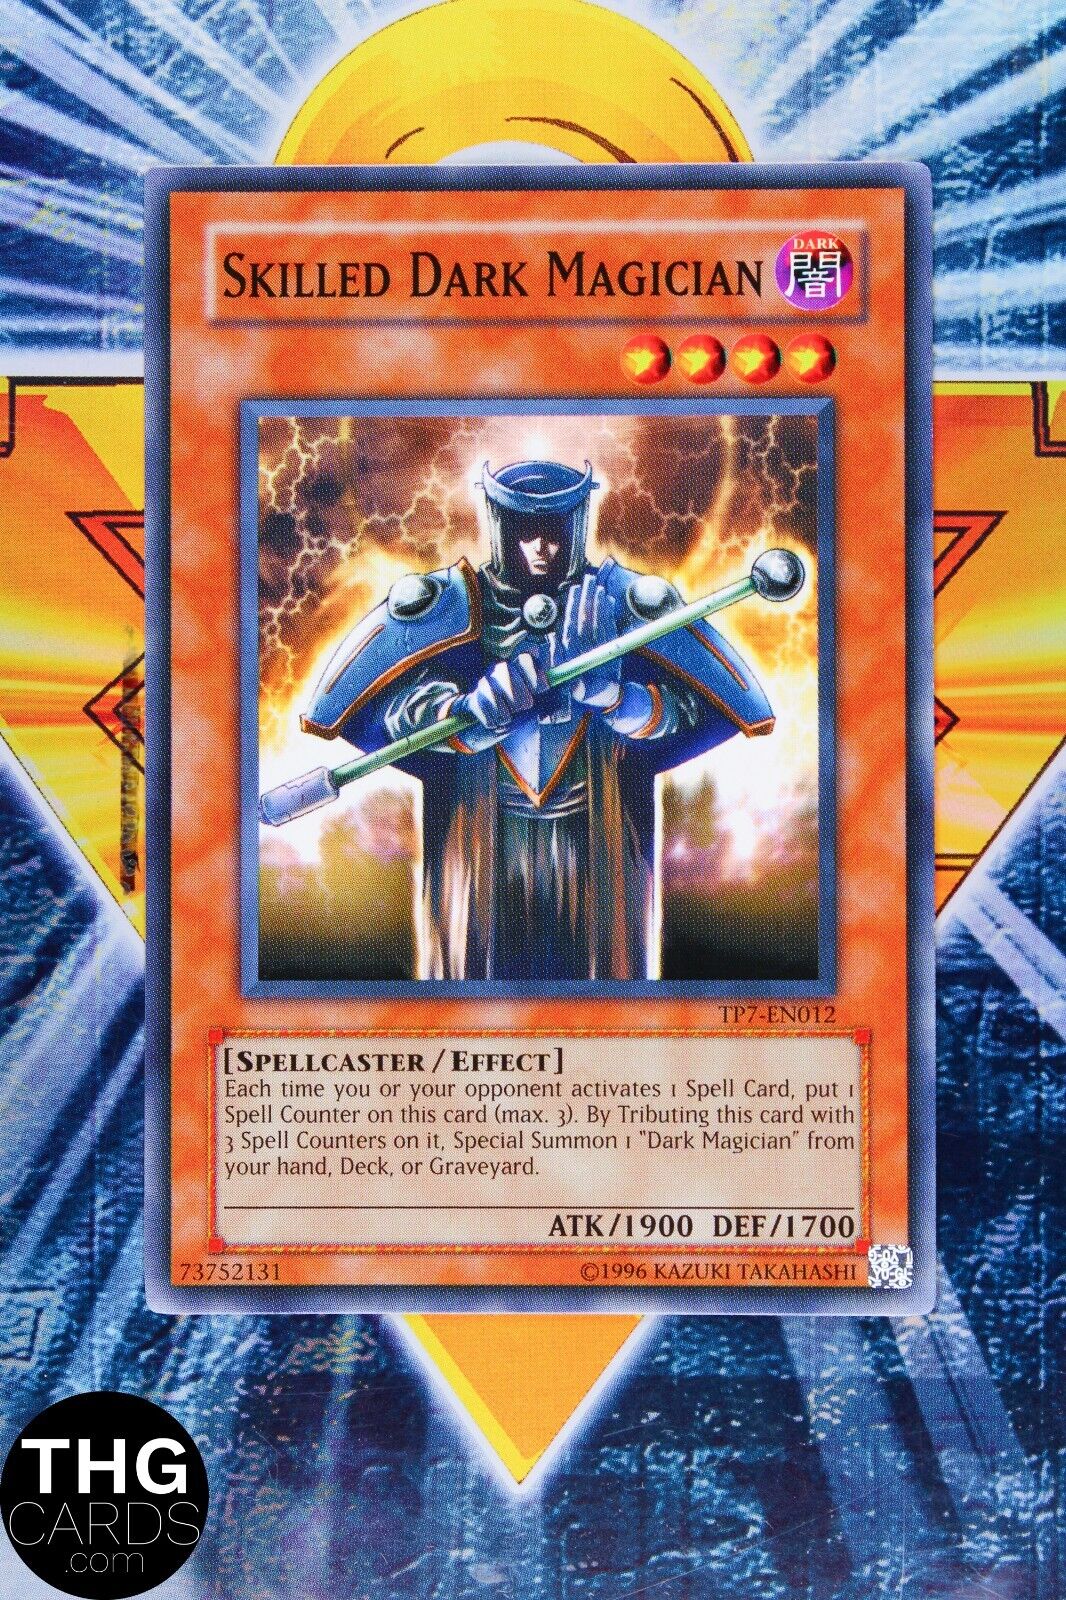 Skilled Dark Magician TP7-EN012 Common Yugioh Card